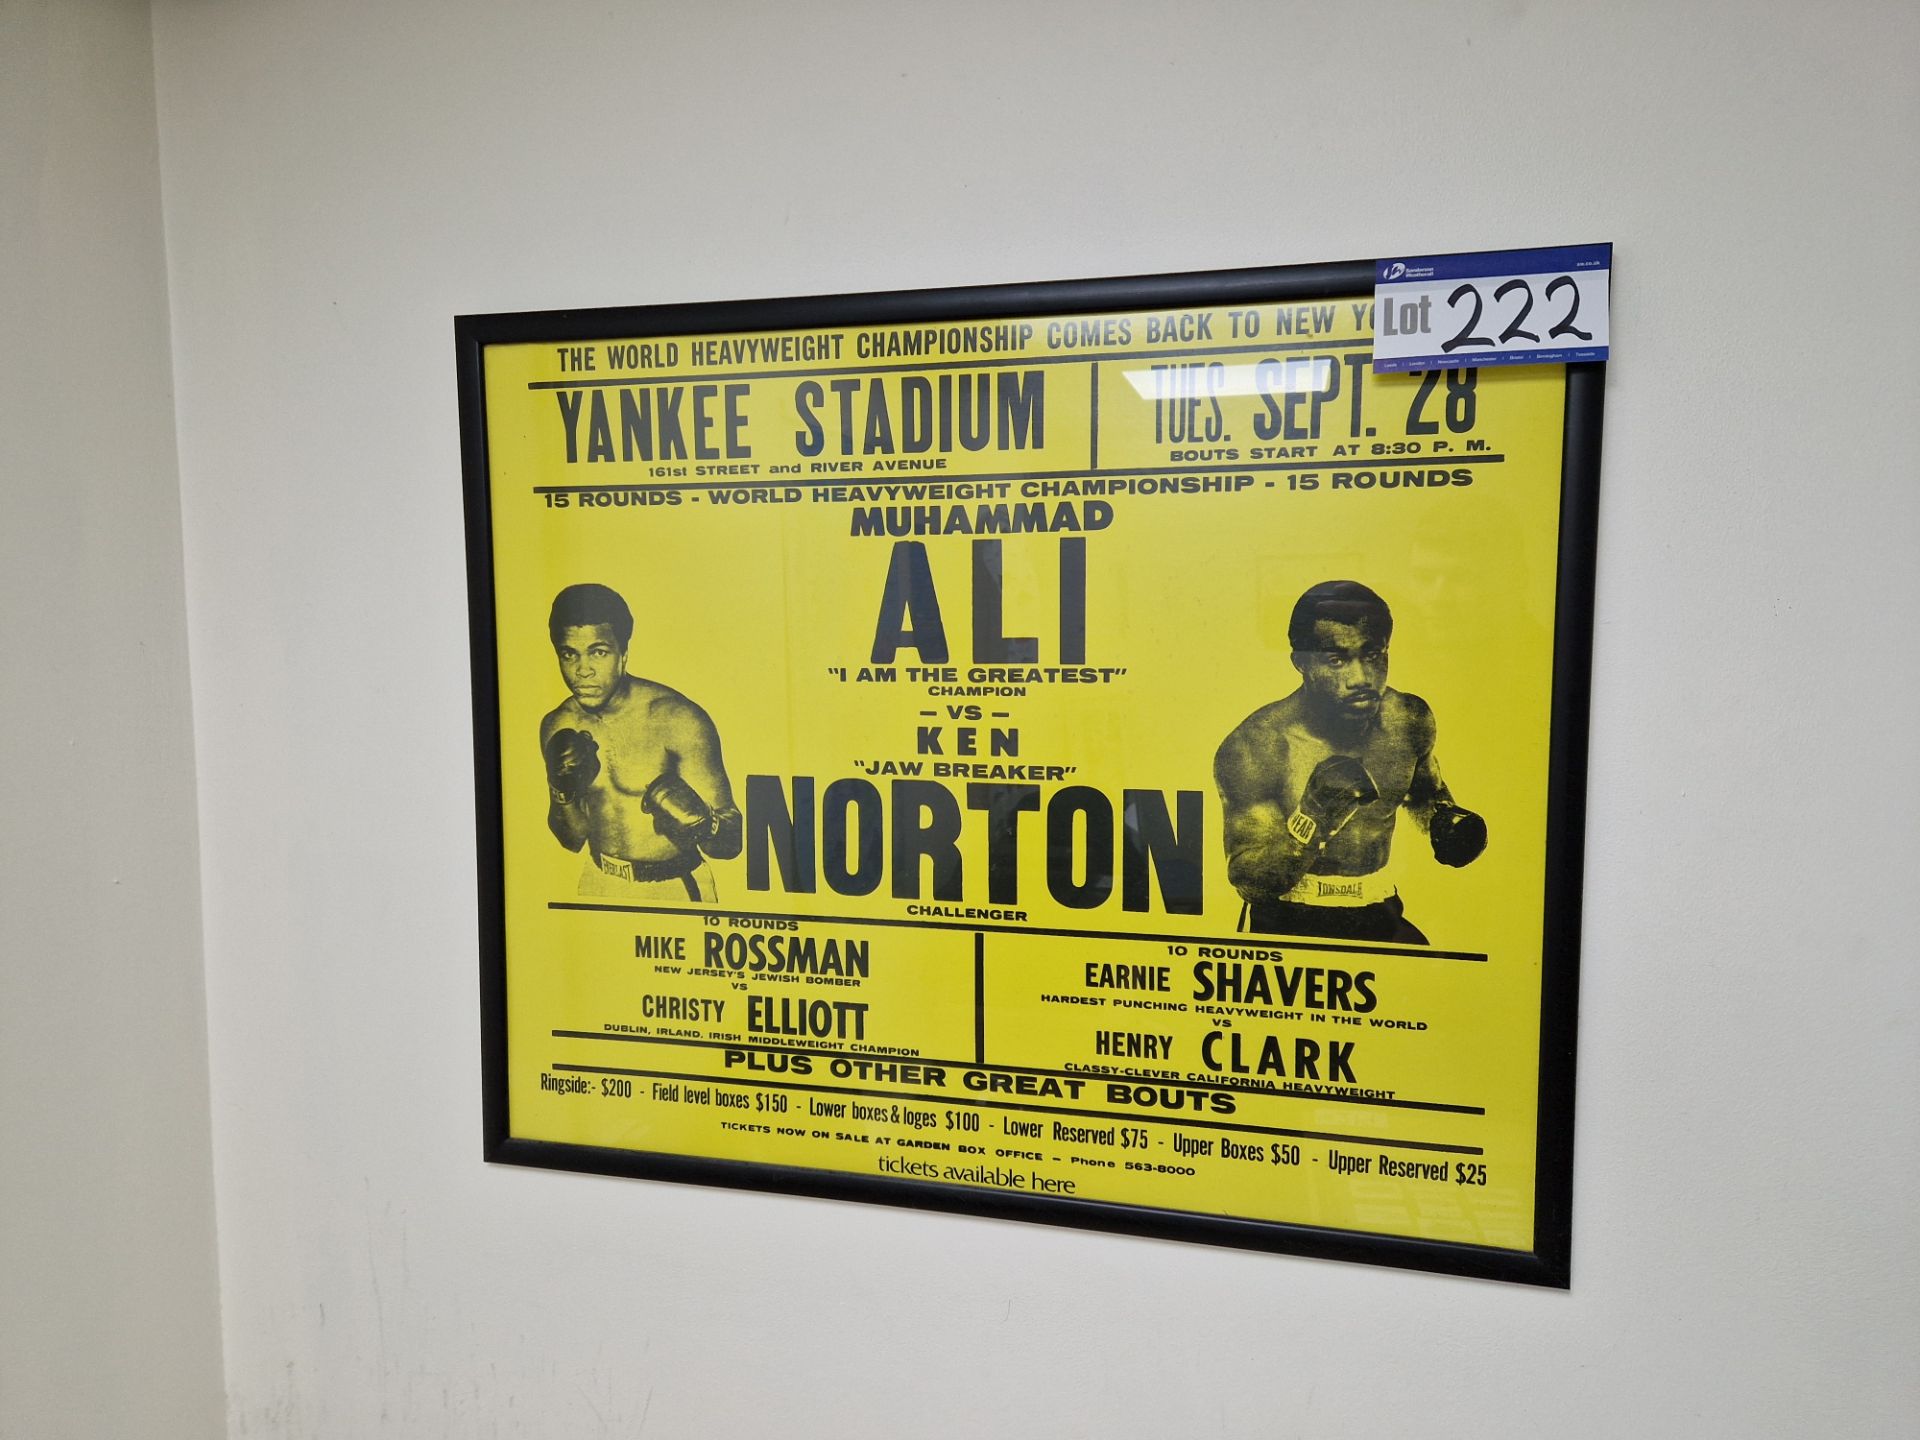 Framed Photograph of Ali/ Frazier Thriller in Manila, with framed poster of Ali v’s NortonPlease - Image 2 of 2